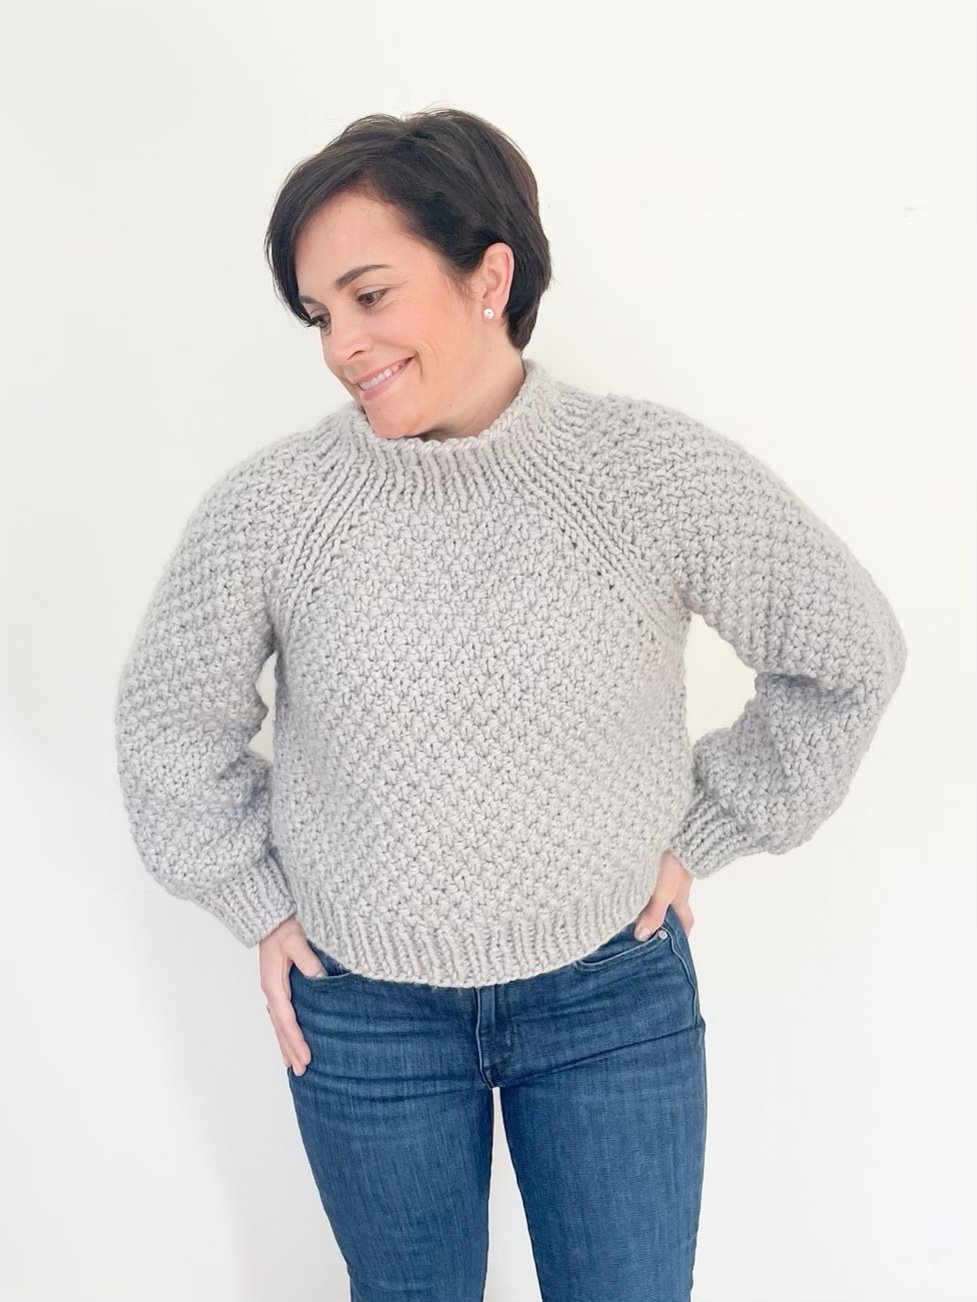 Behoefte aan Verenigen Verdraaiing Knitting Patterns — Ashley Lillis